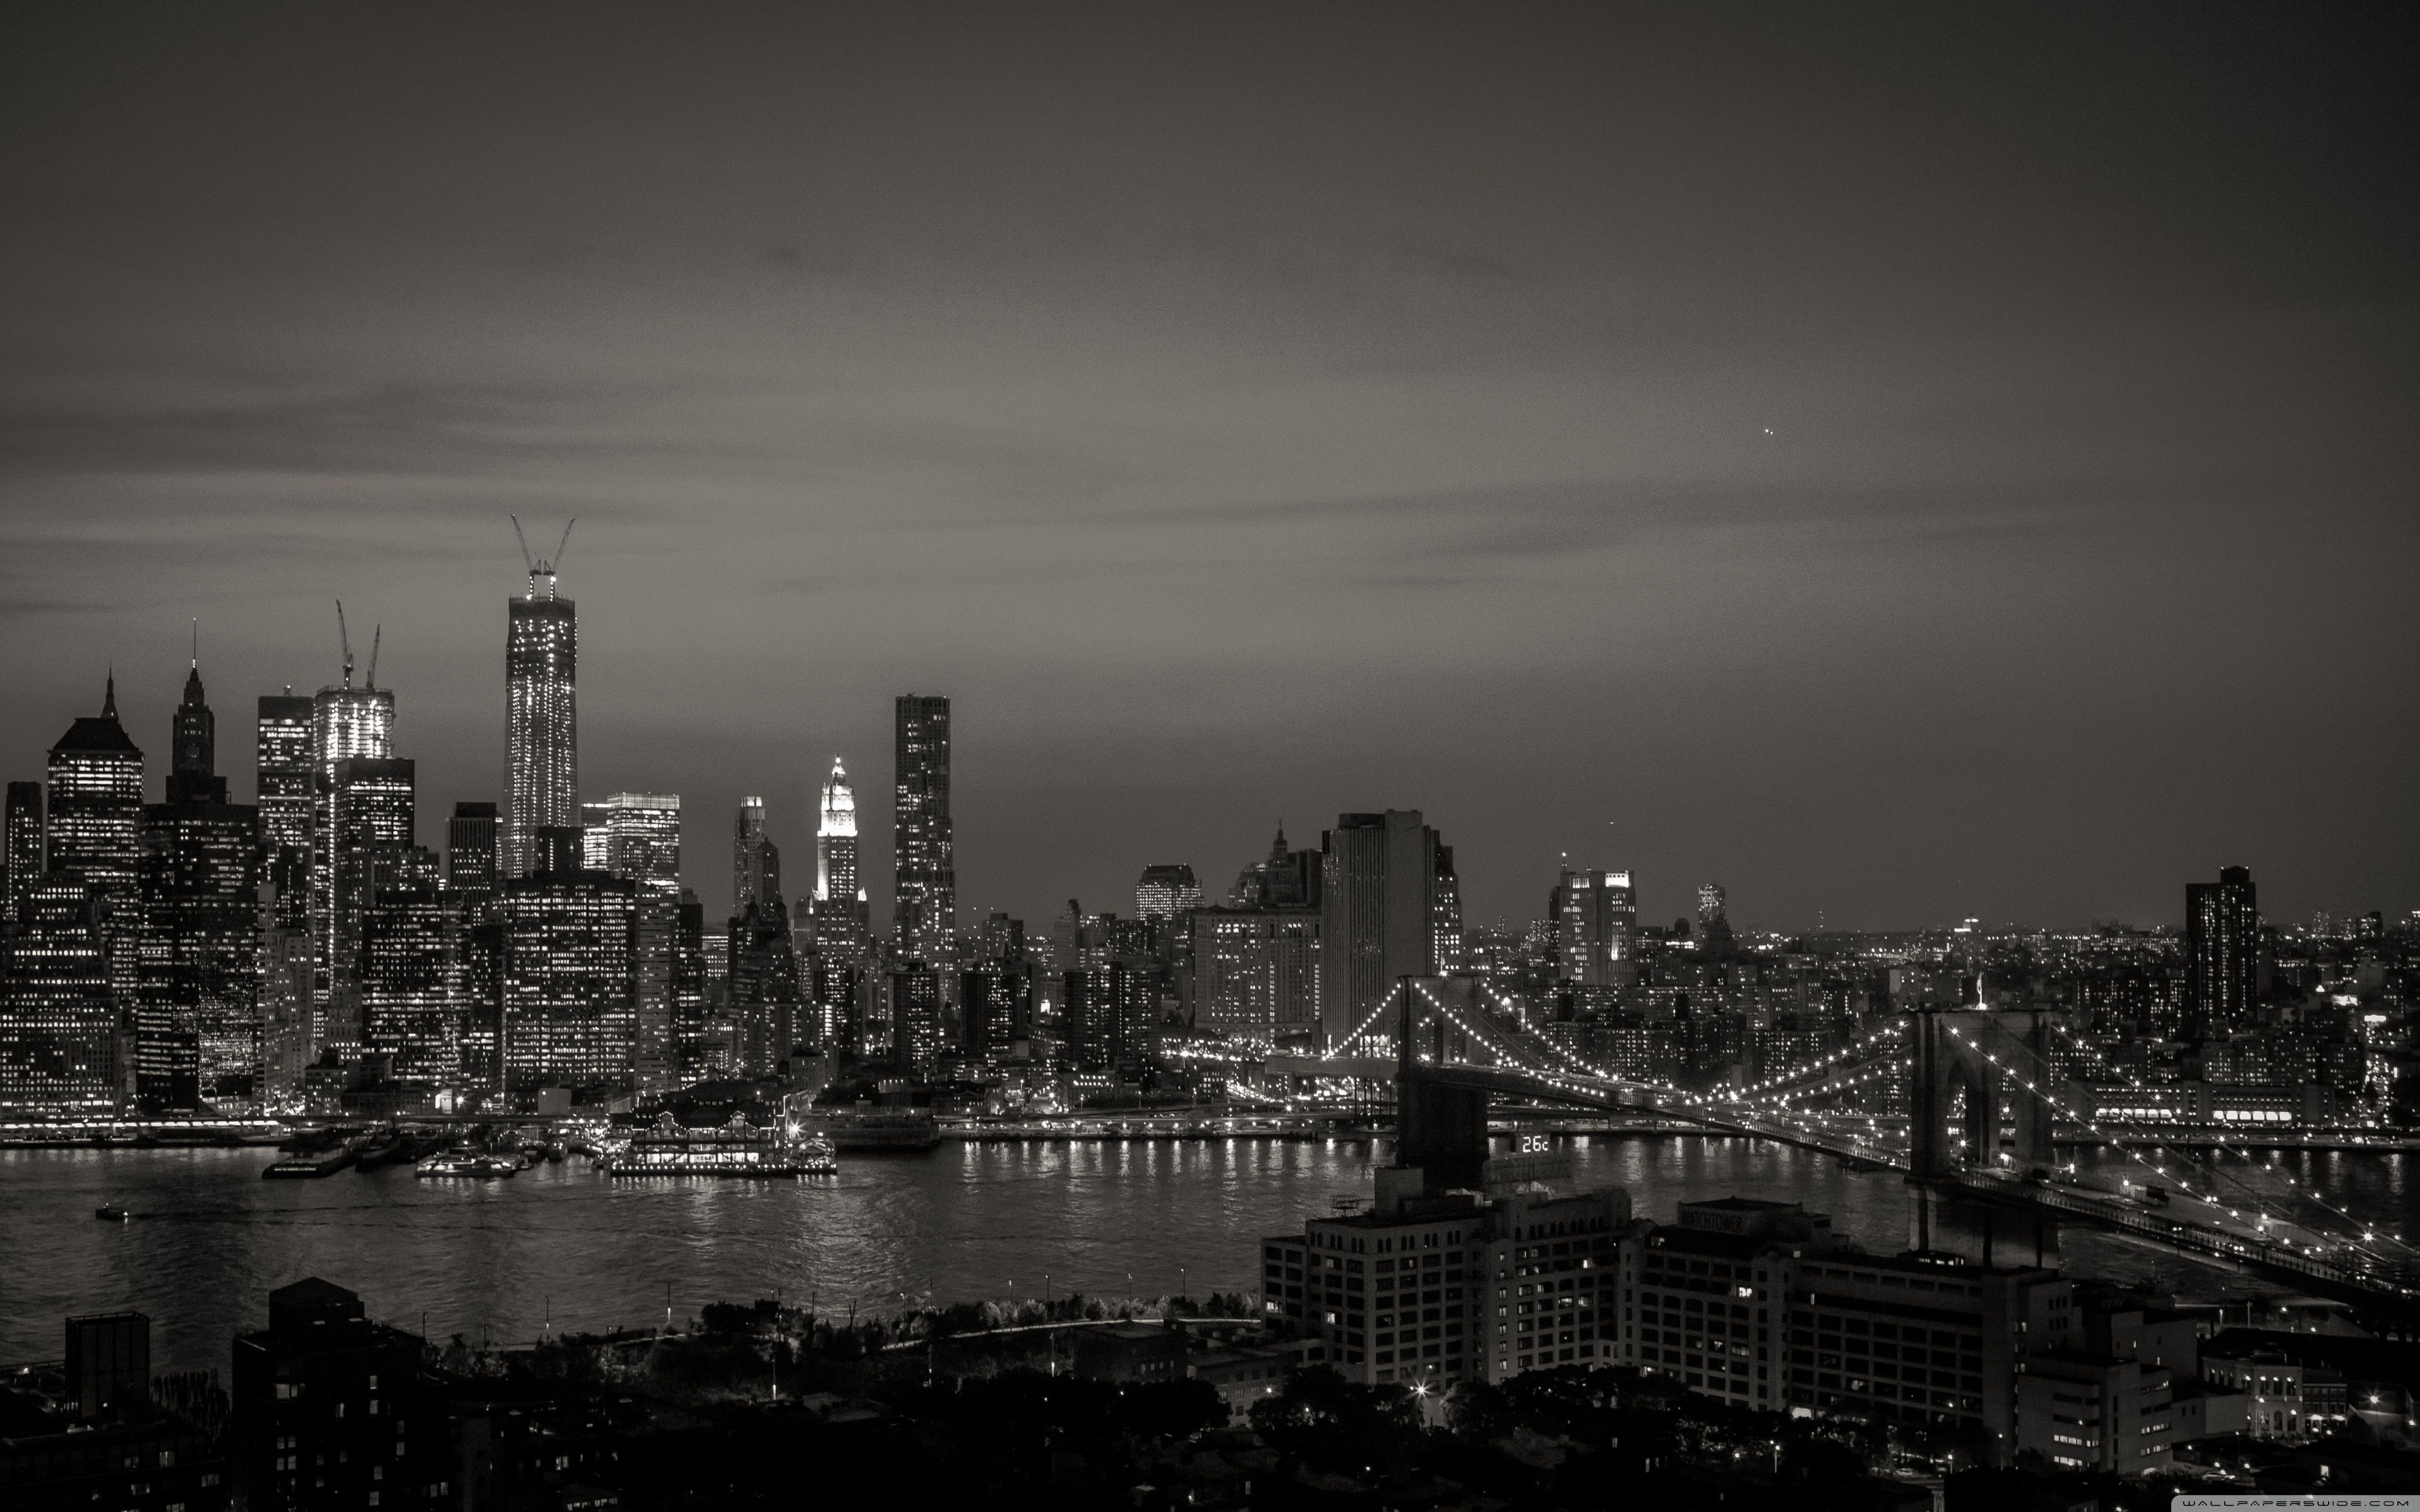 New York City at night wallpaper 2560x1440 for desktop - Black and white